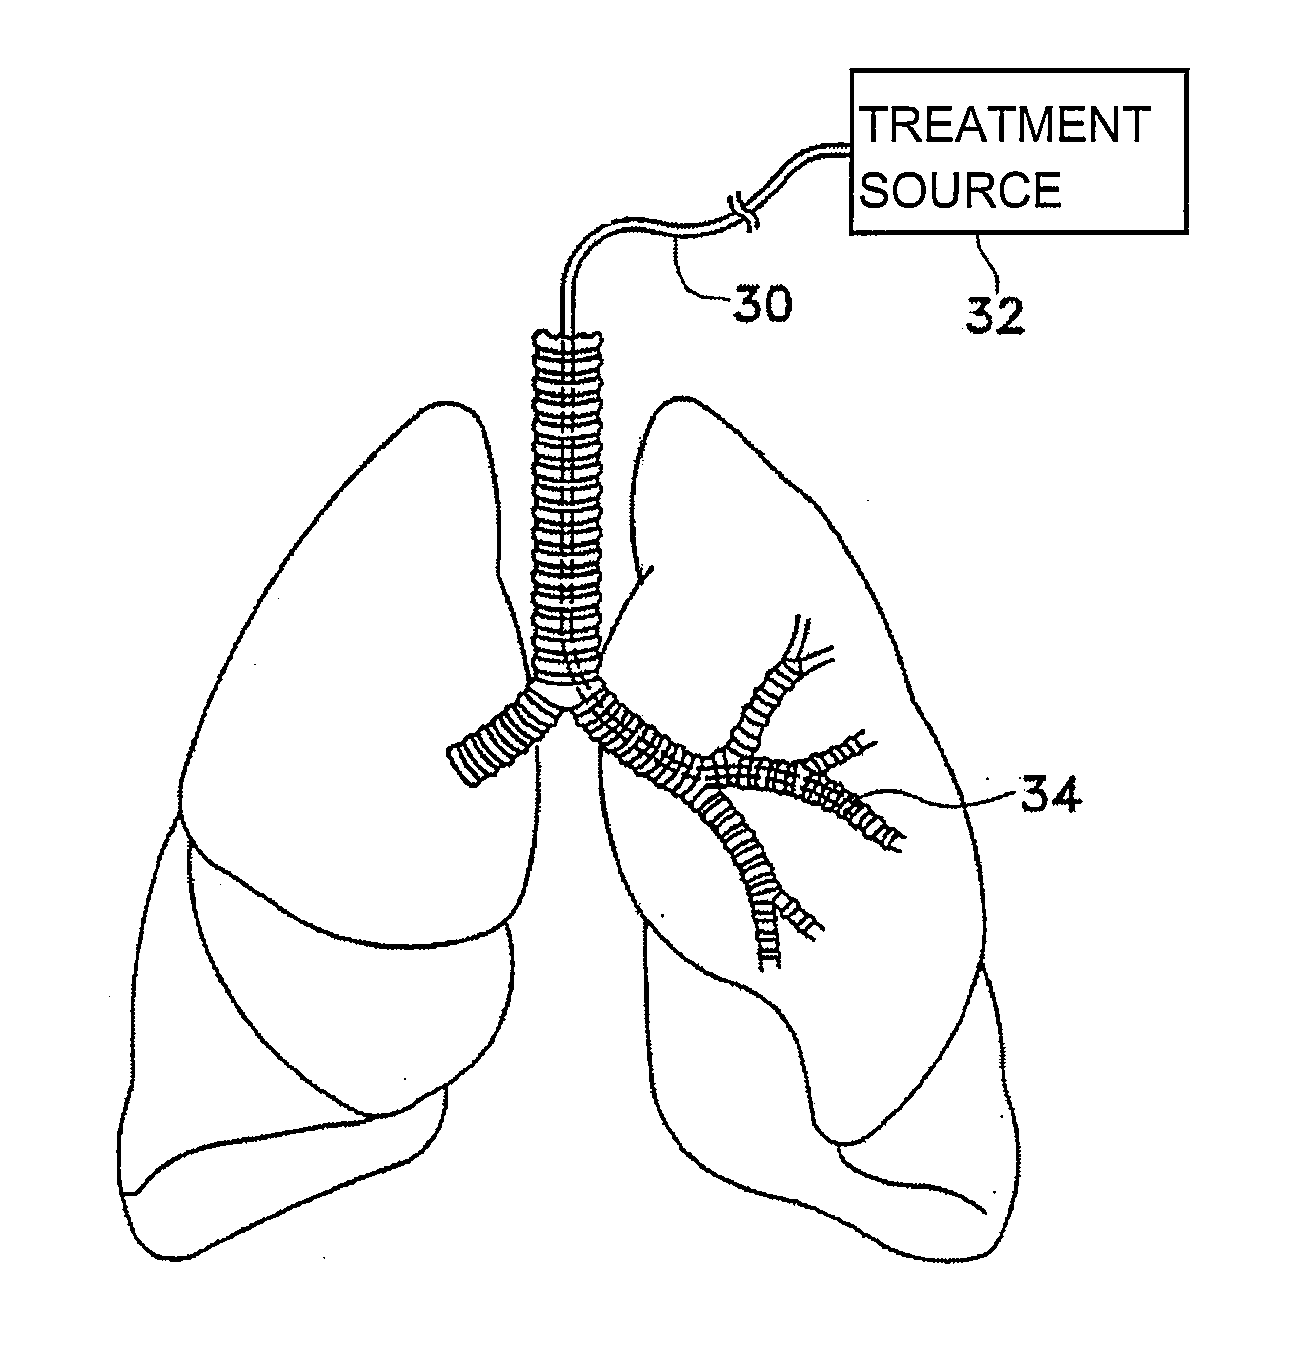 Methods of reducing mucus in airways